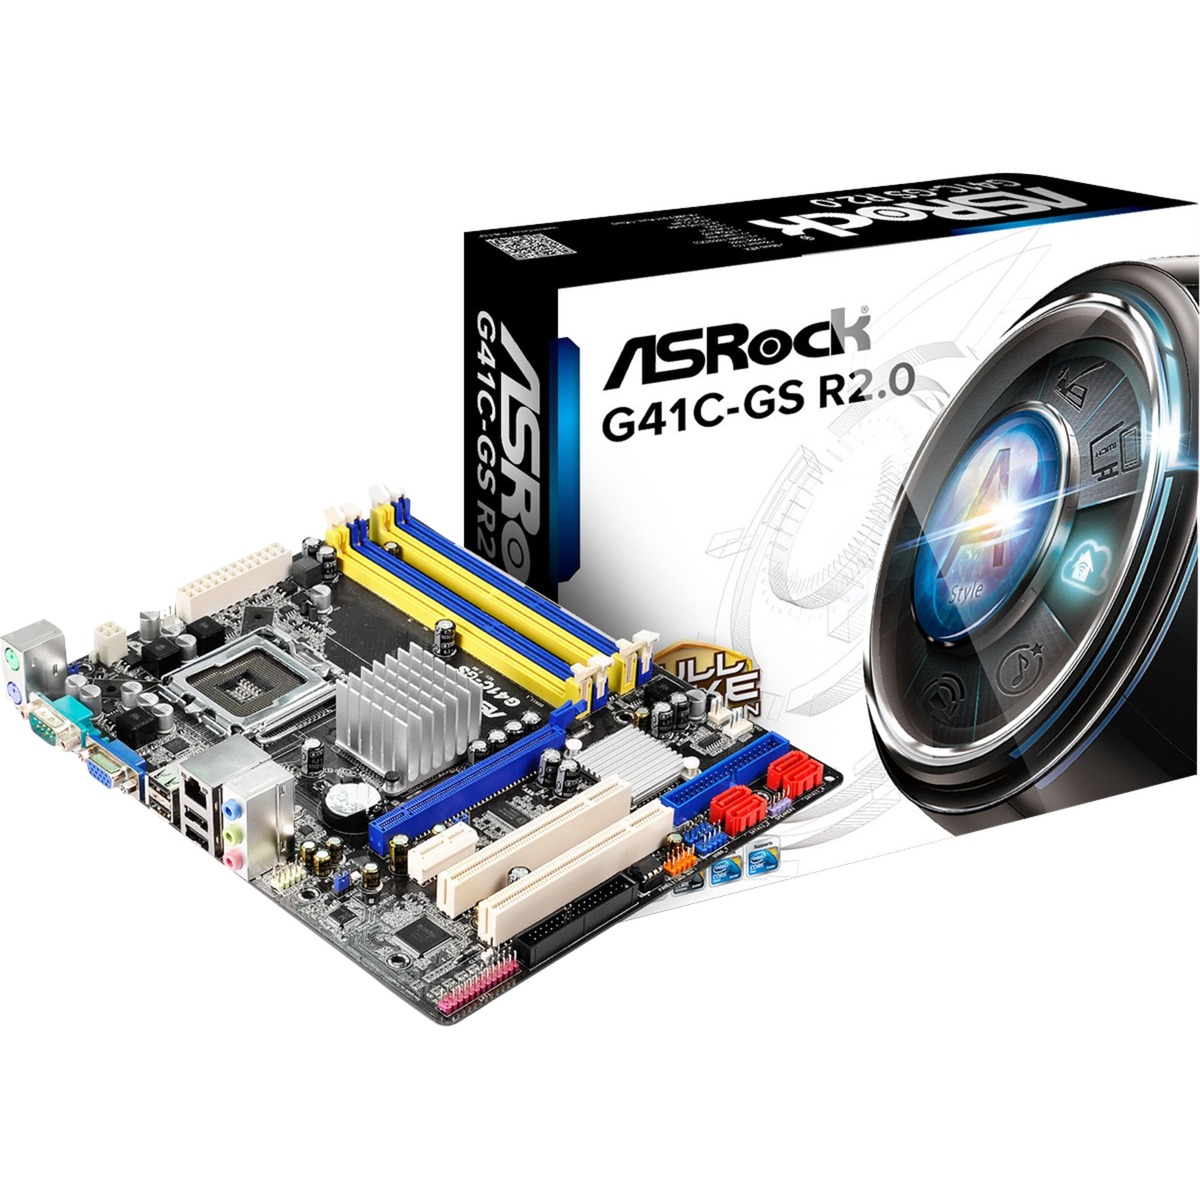 G41C-GS R2.0 LGA 775 (Socket T) Intel G41 micro ATX, Płyta główna